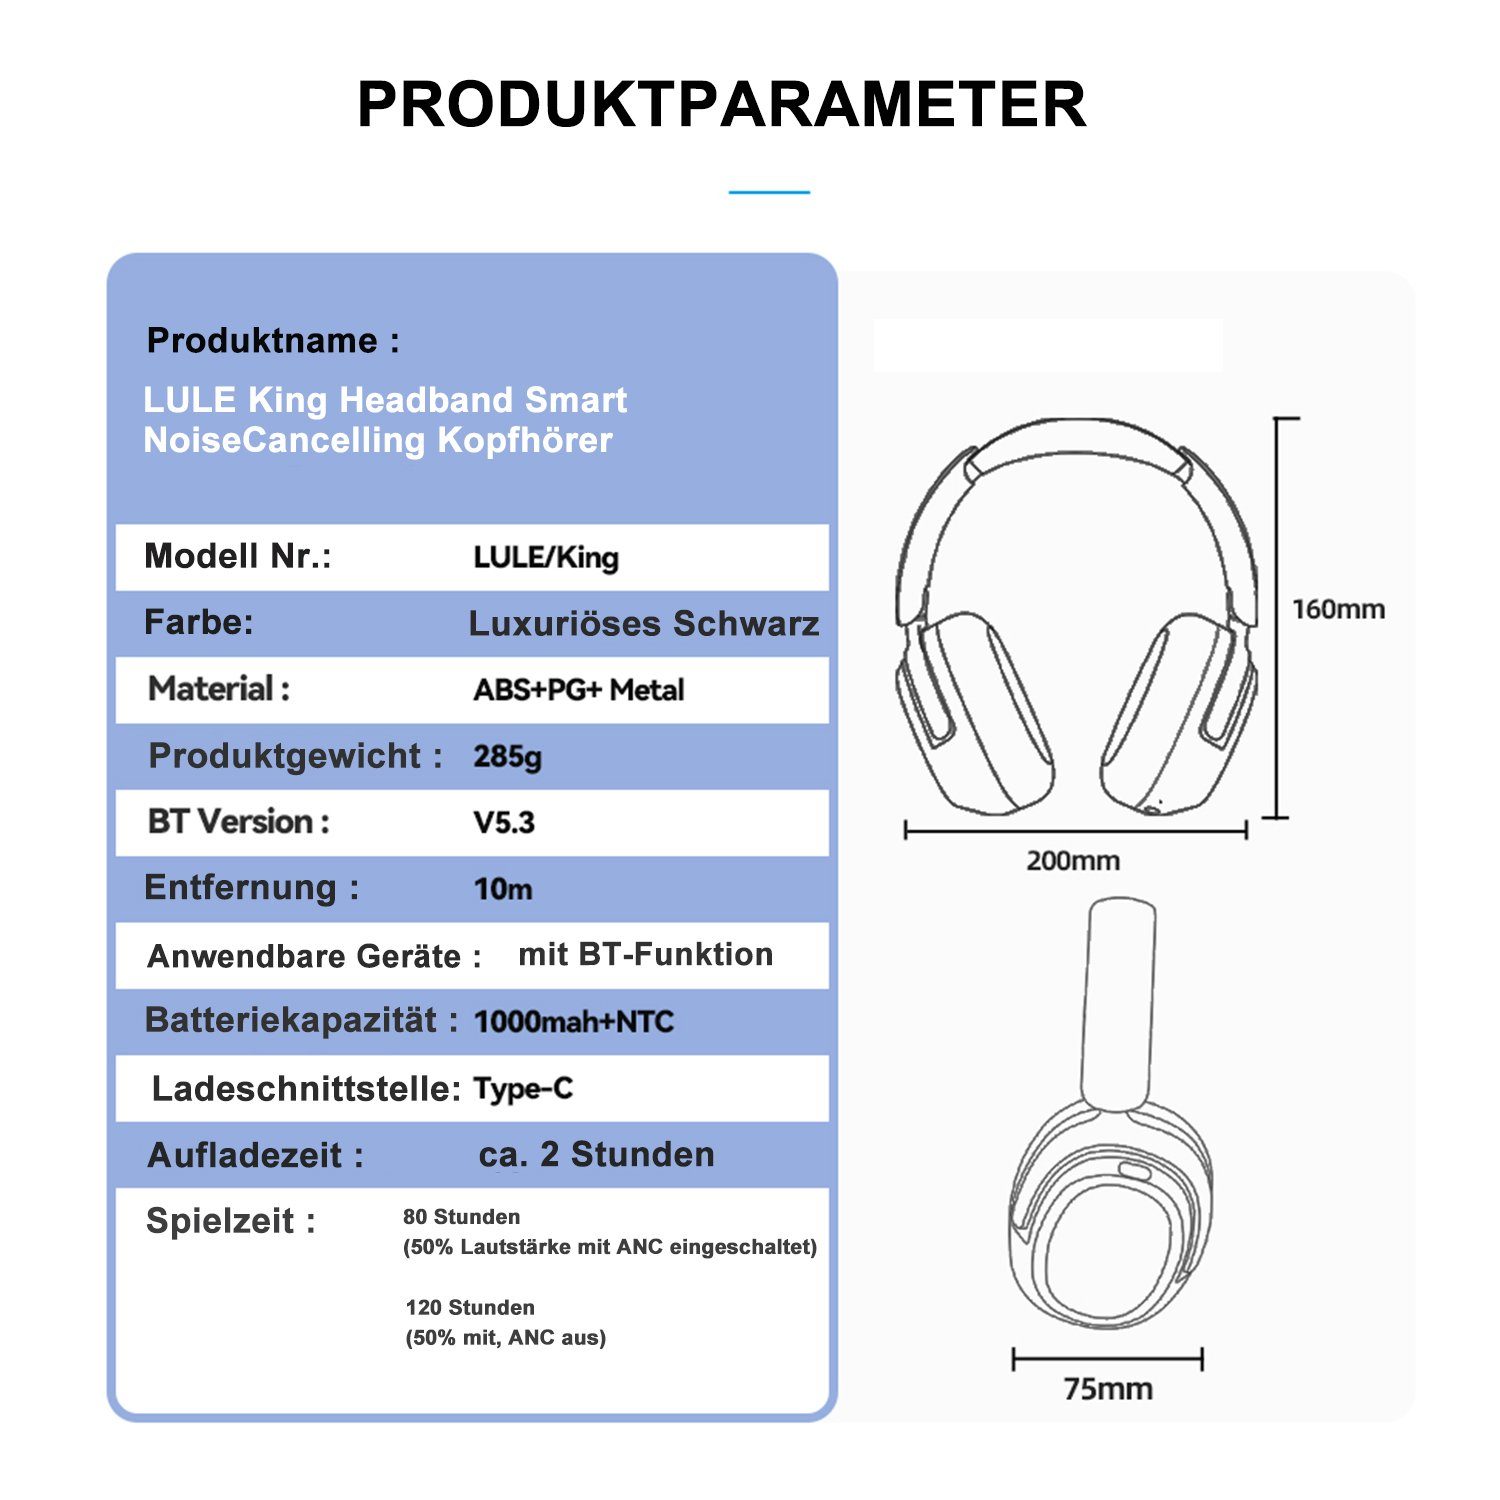 Ideal Homeoffice, (Noise-Cancelling-Bluetooth-Kopfhörer,Hi-Res Akku, 45db Geräuschunterdrückung für Weiche Intensität, Over-Ear 120h Over-Ear-Kopfhörer Kopfhörer,Gaming-Headset Bluetooth mit mit Reisen) Audio, Ohrpolster, Geräuschreduzierung IBETTER